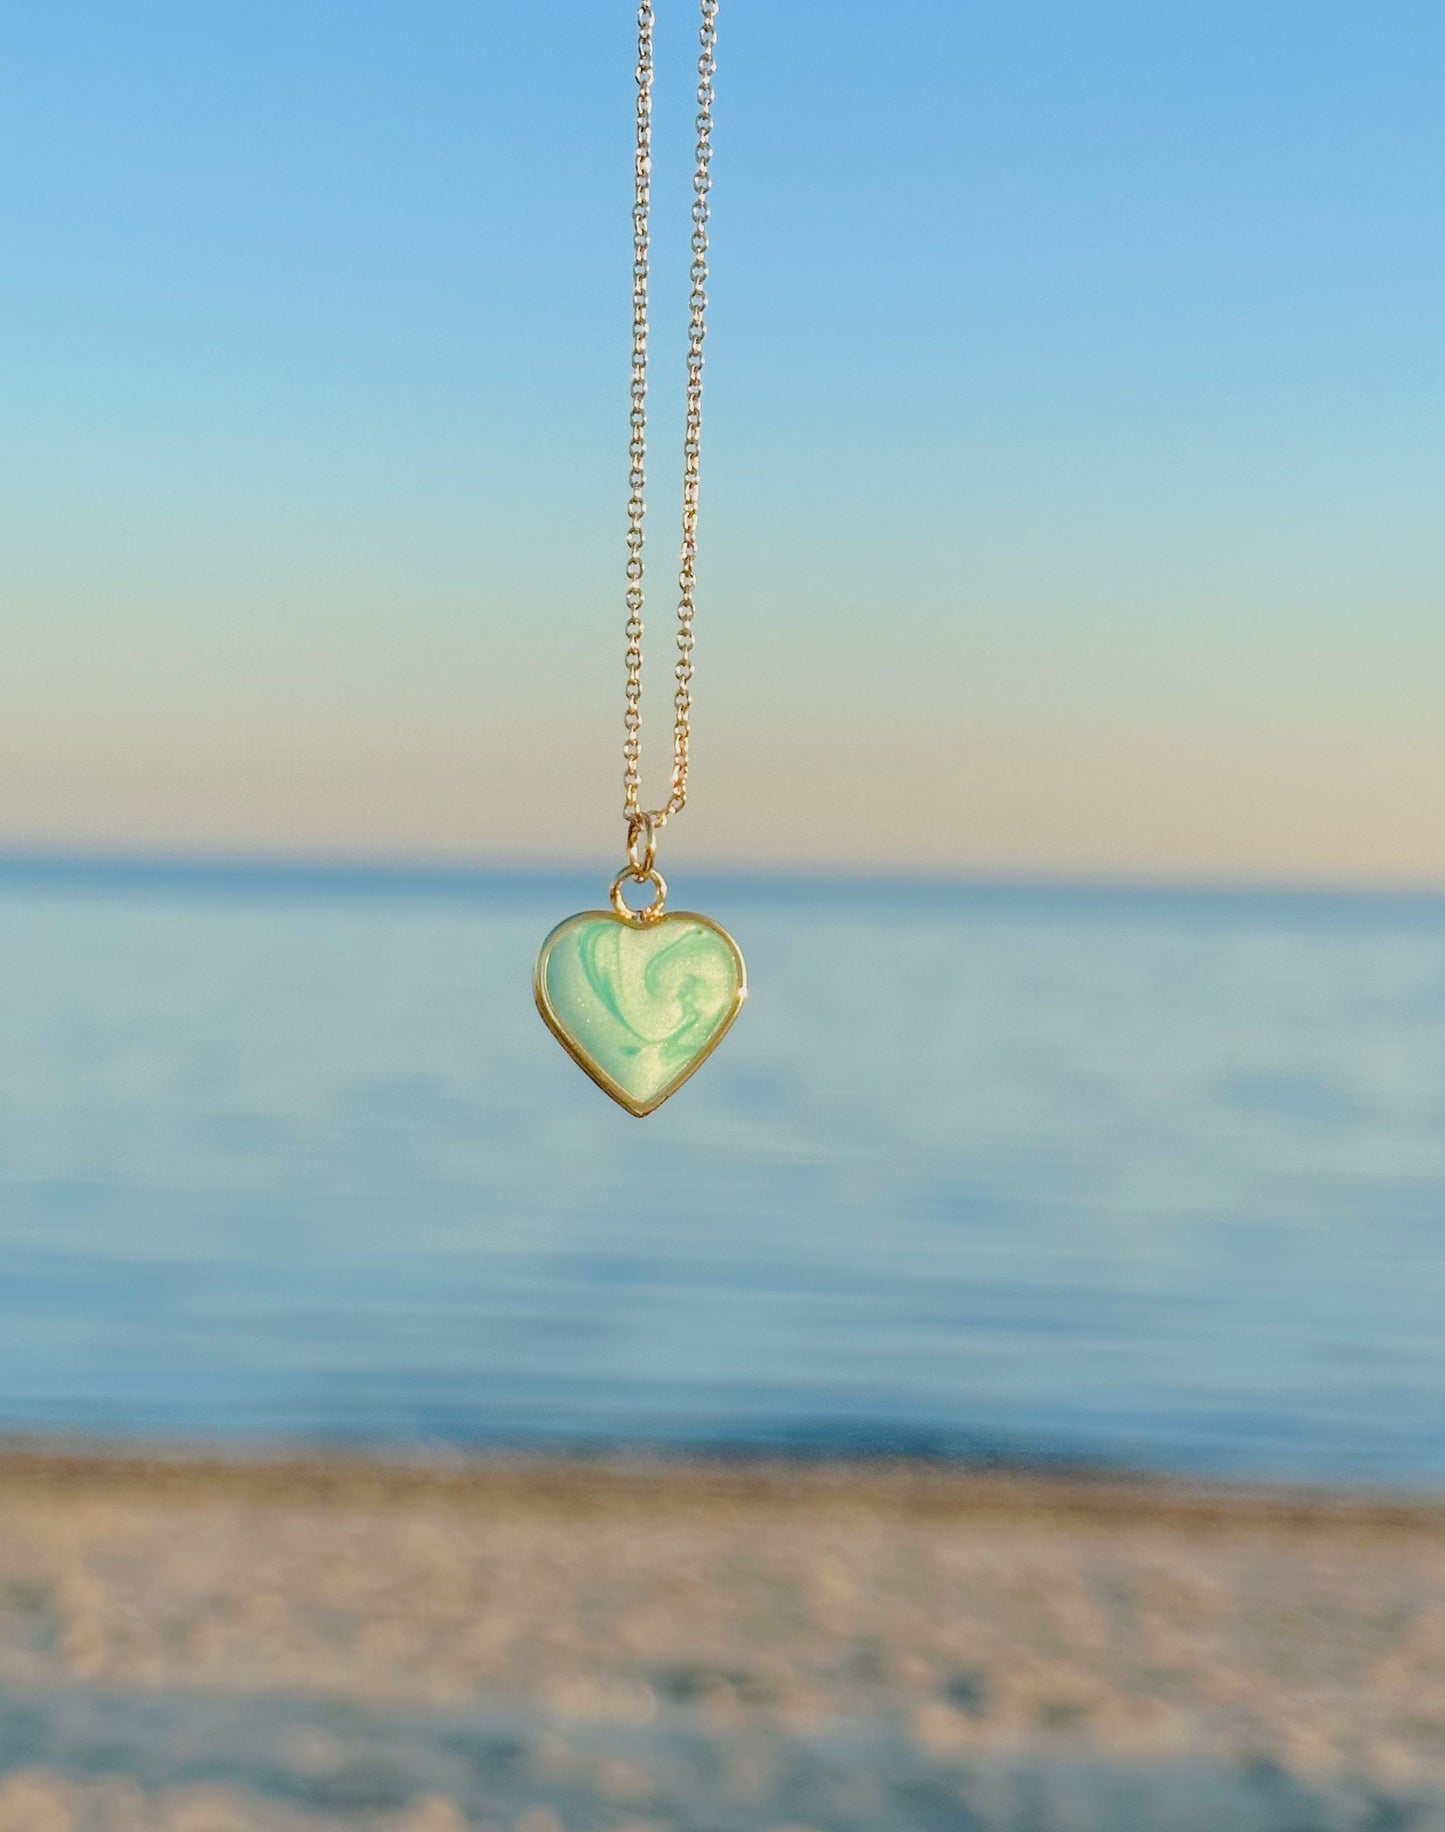 Aqua swirl heart pendant necklace